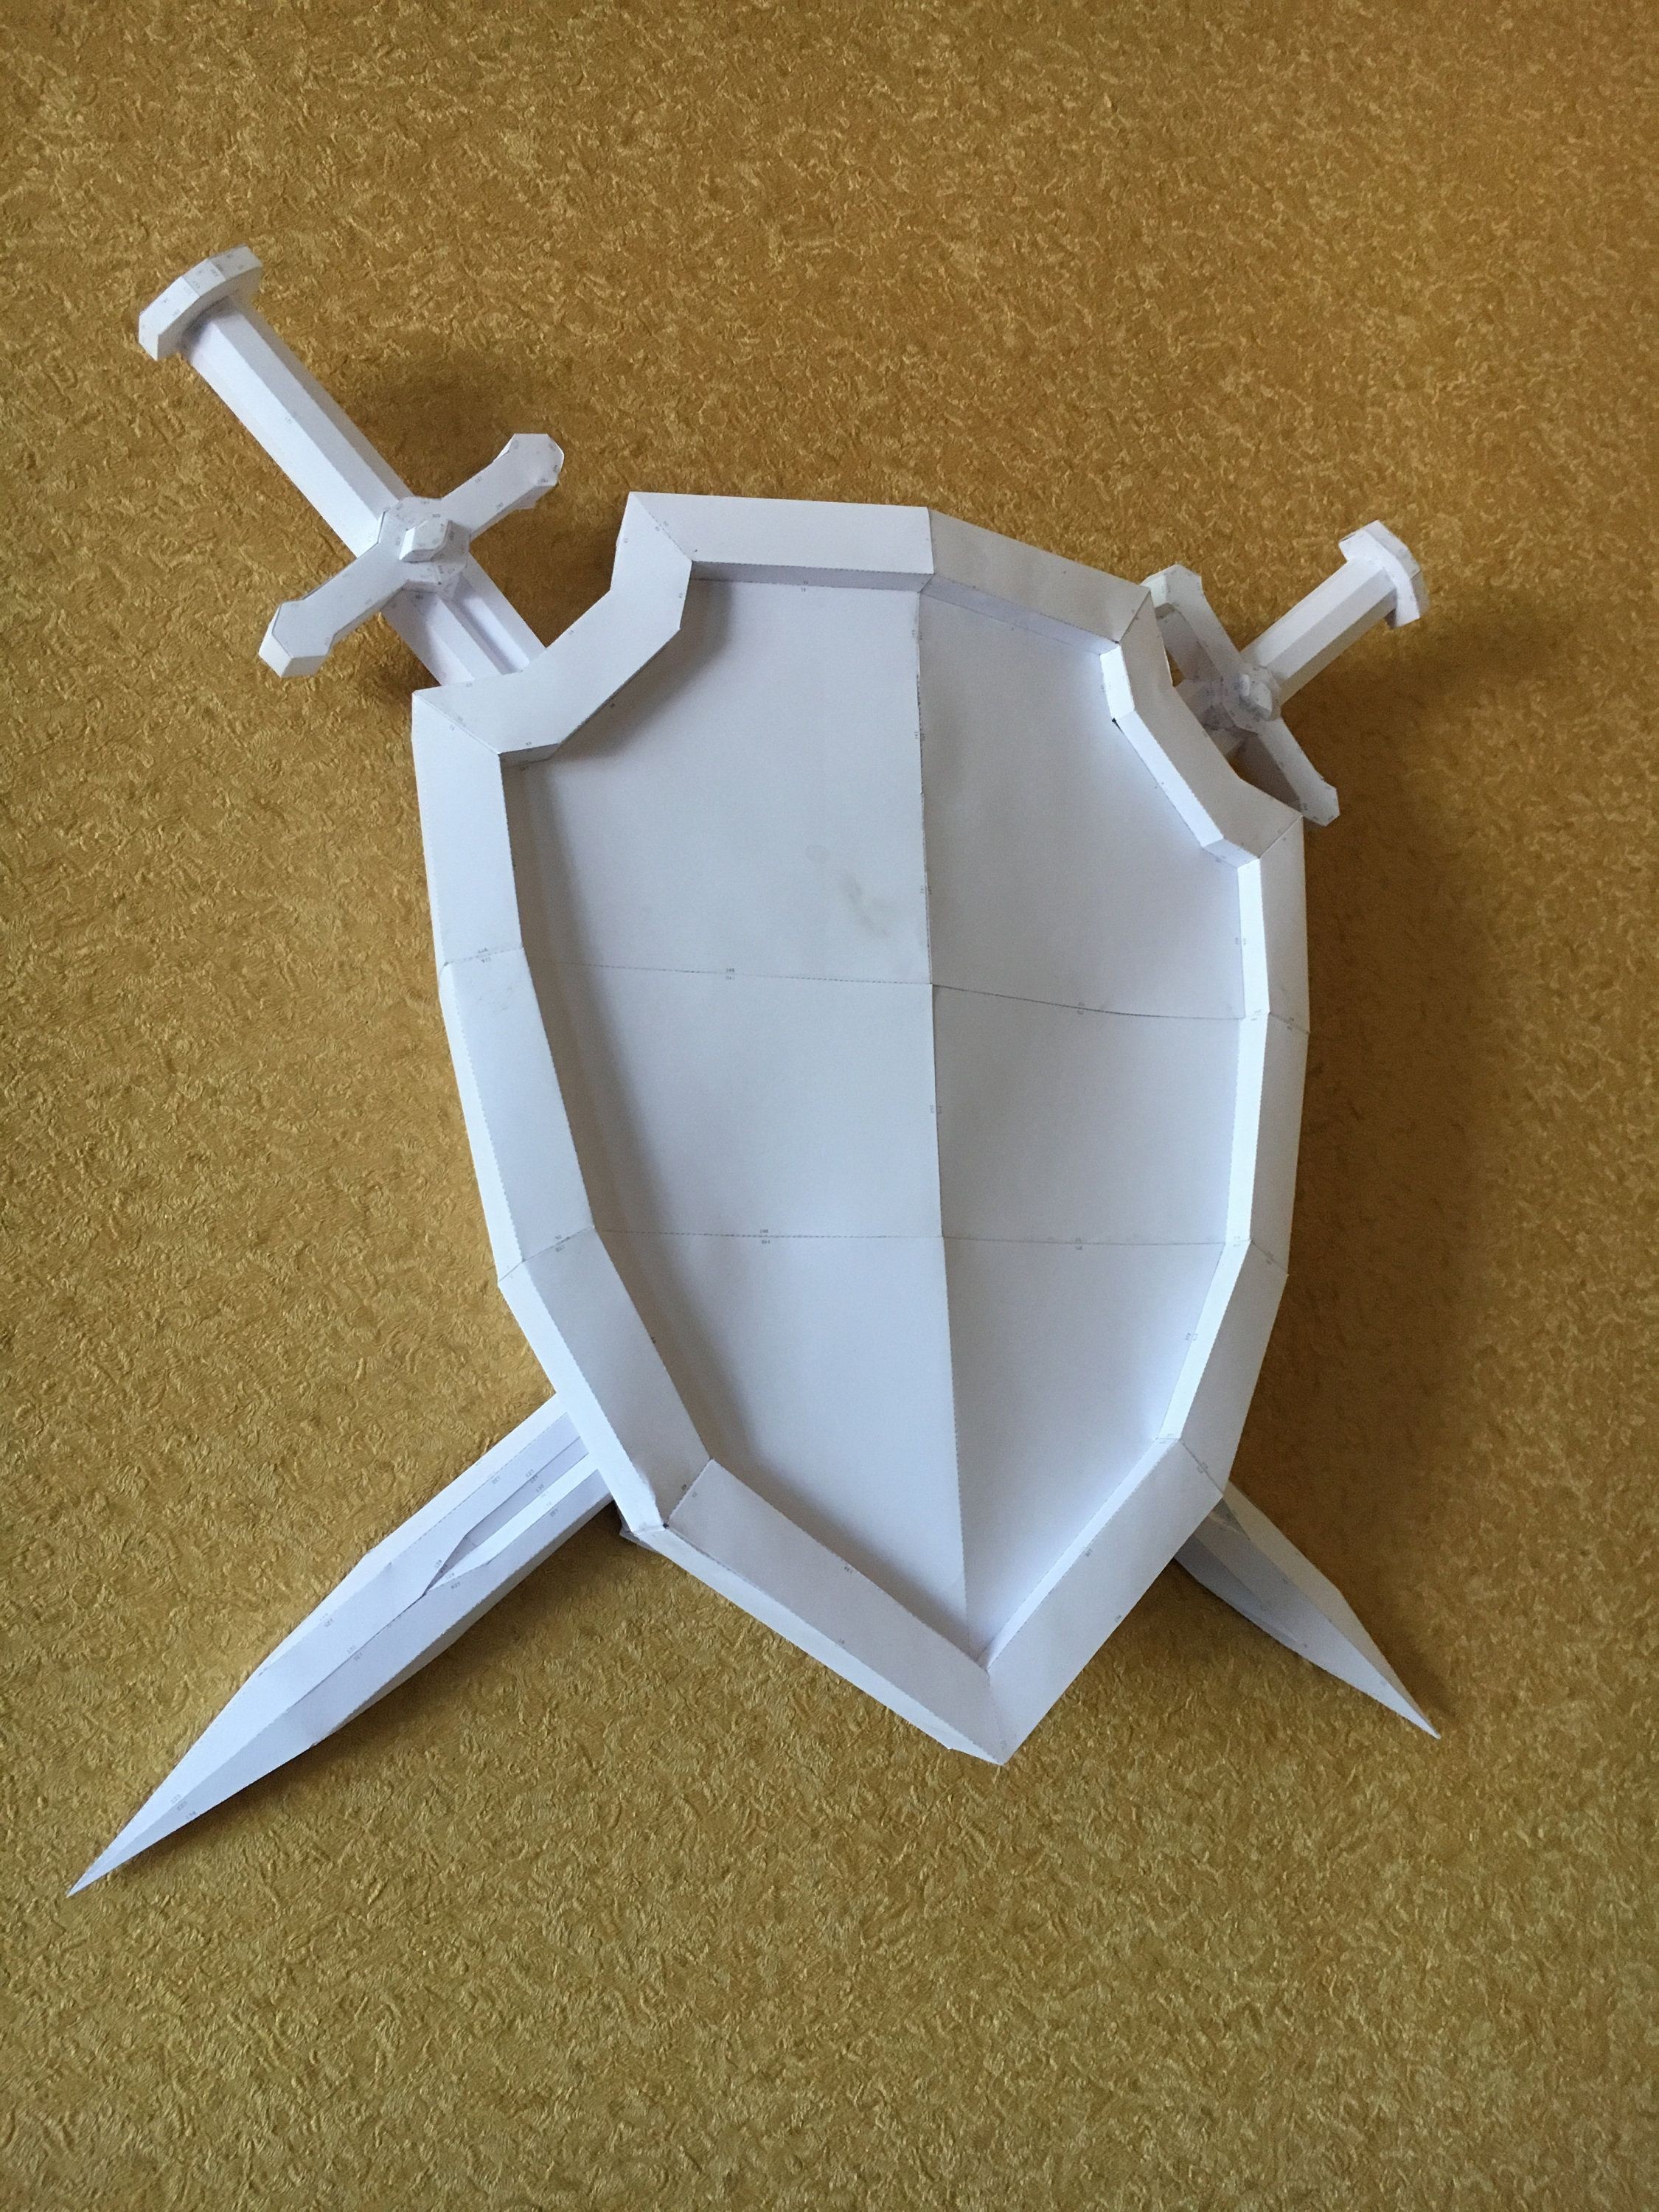 Master Sword Papercraft Sword Shield Diy Papercraft Model ÐÑÐ¼Ð°Ð¶Ð½ÑÐµ Ð¸Ð·Ð´ÐµÐ Ð¸Ñ